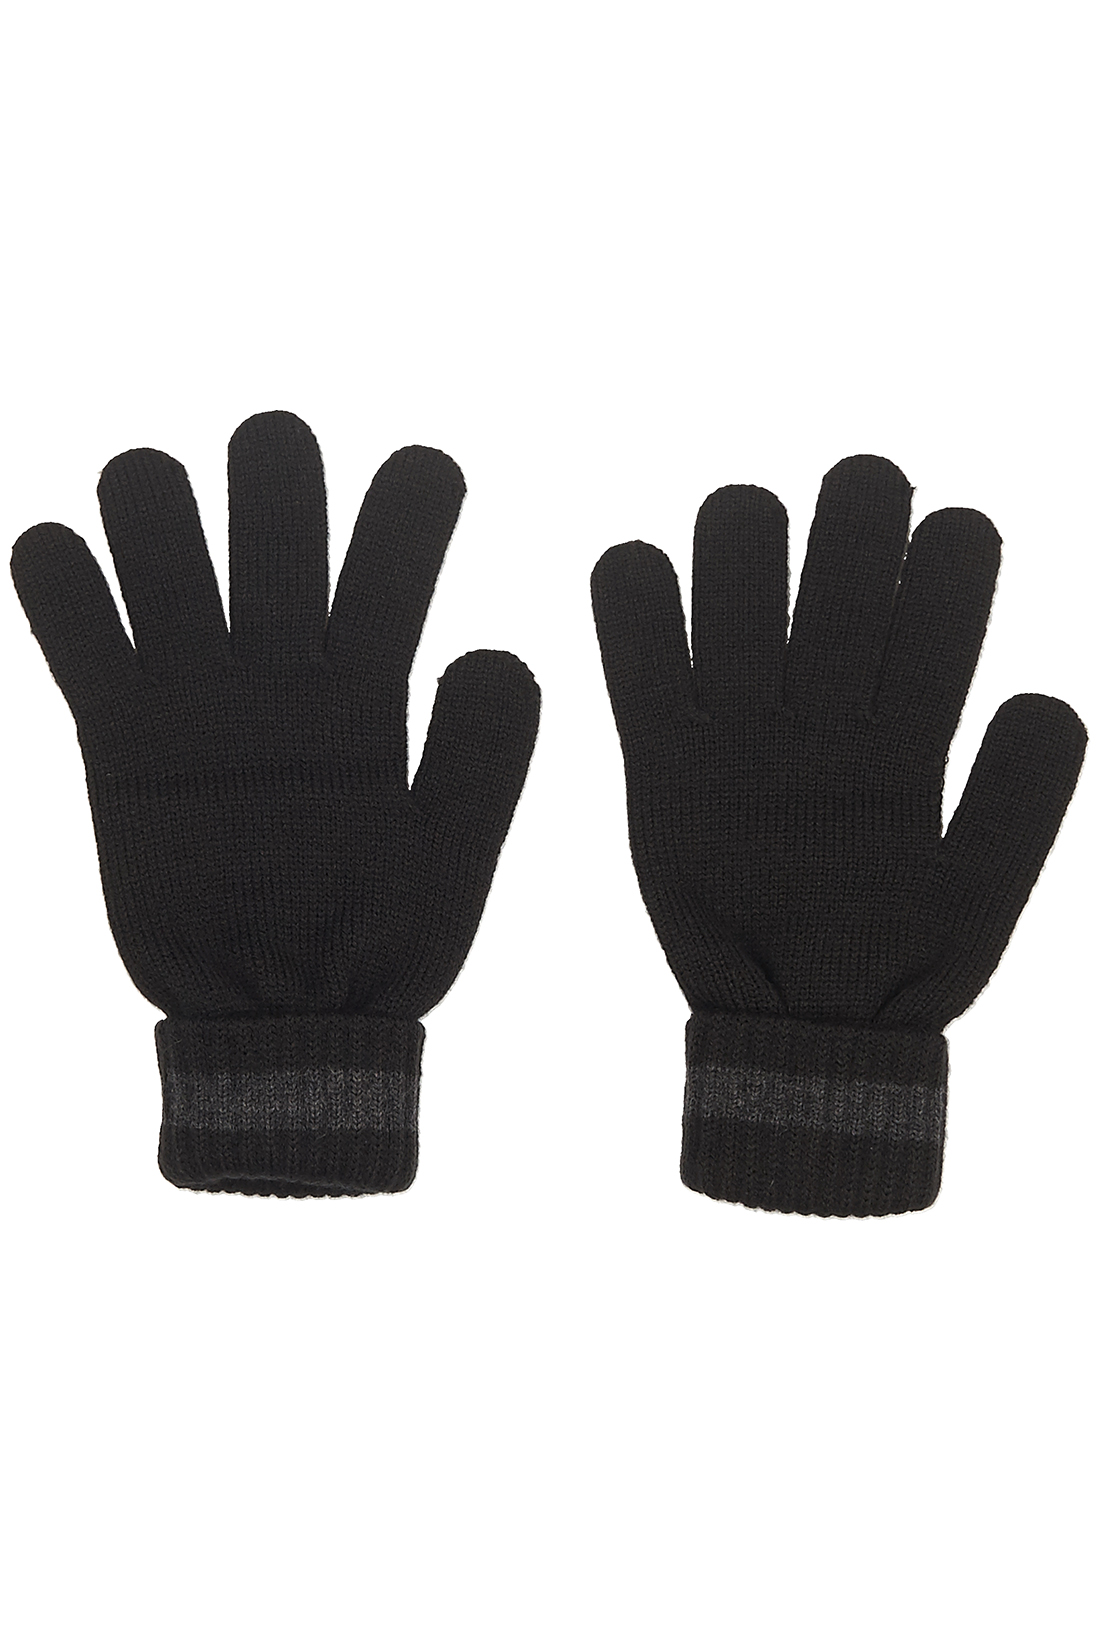 Перчатки с манжетами-отворотами (арт. baon B868502), размер Без/раз, цвет черный Перчатки с манжетами-отворотами (арт. baon B868502) - фото 2